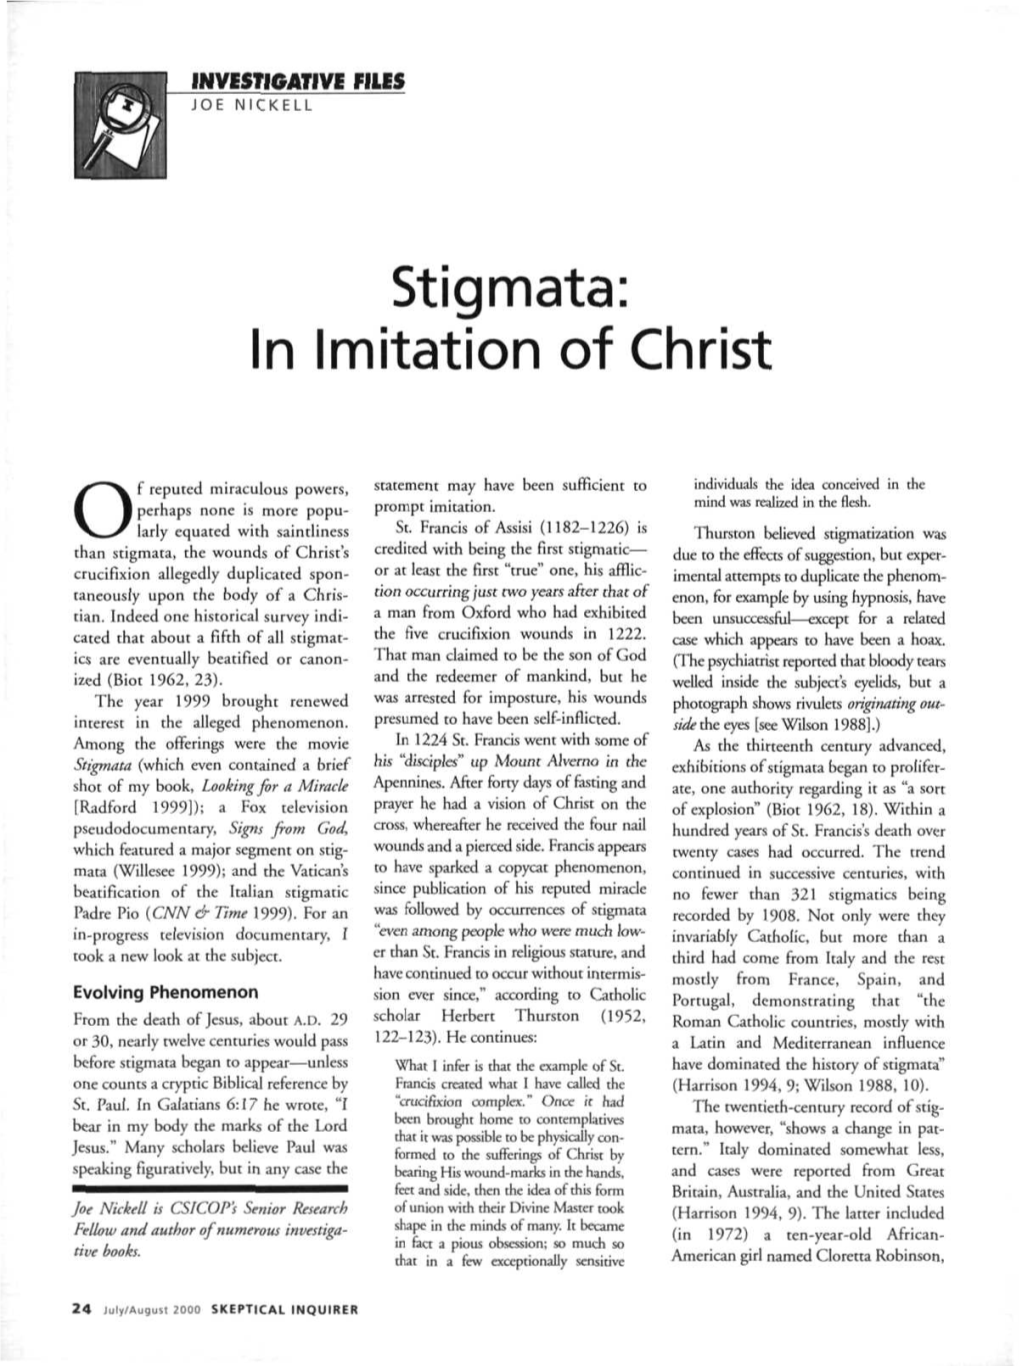 Stigmata: in Imitation of Christ